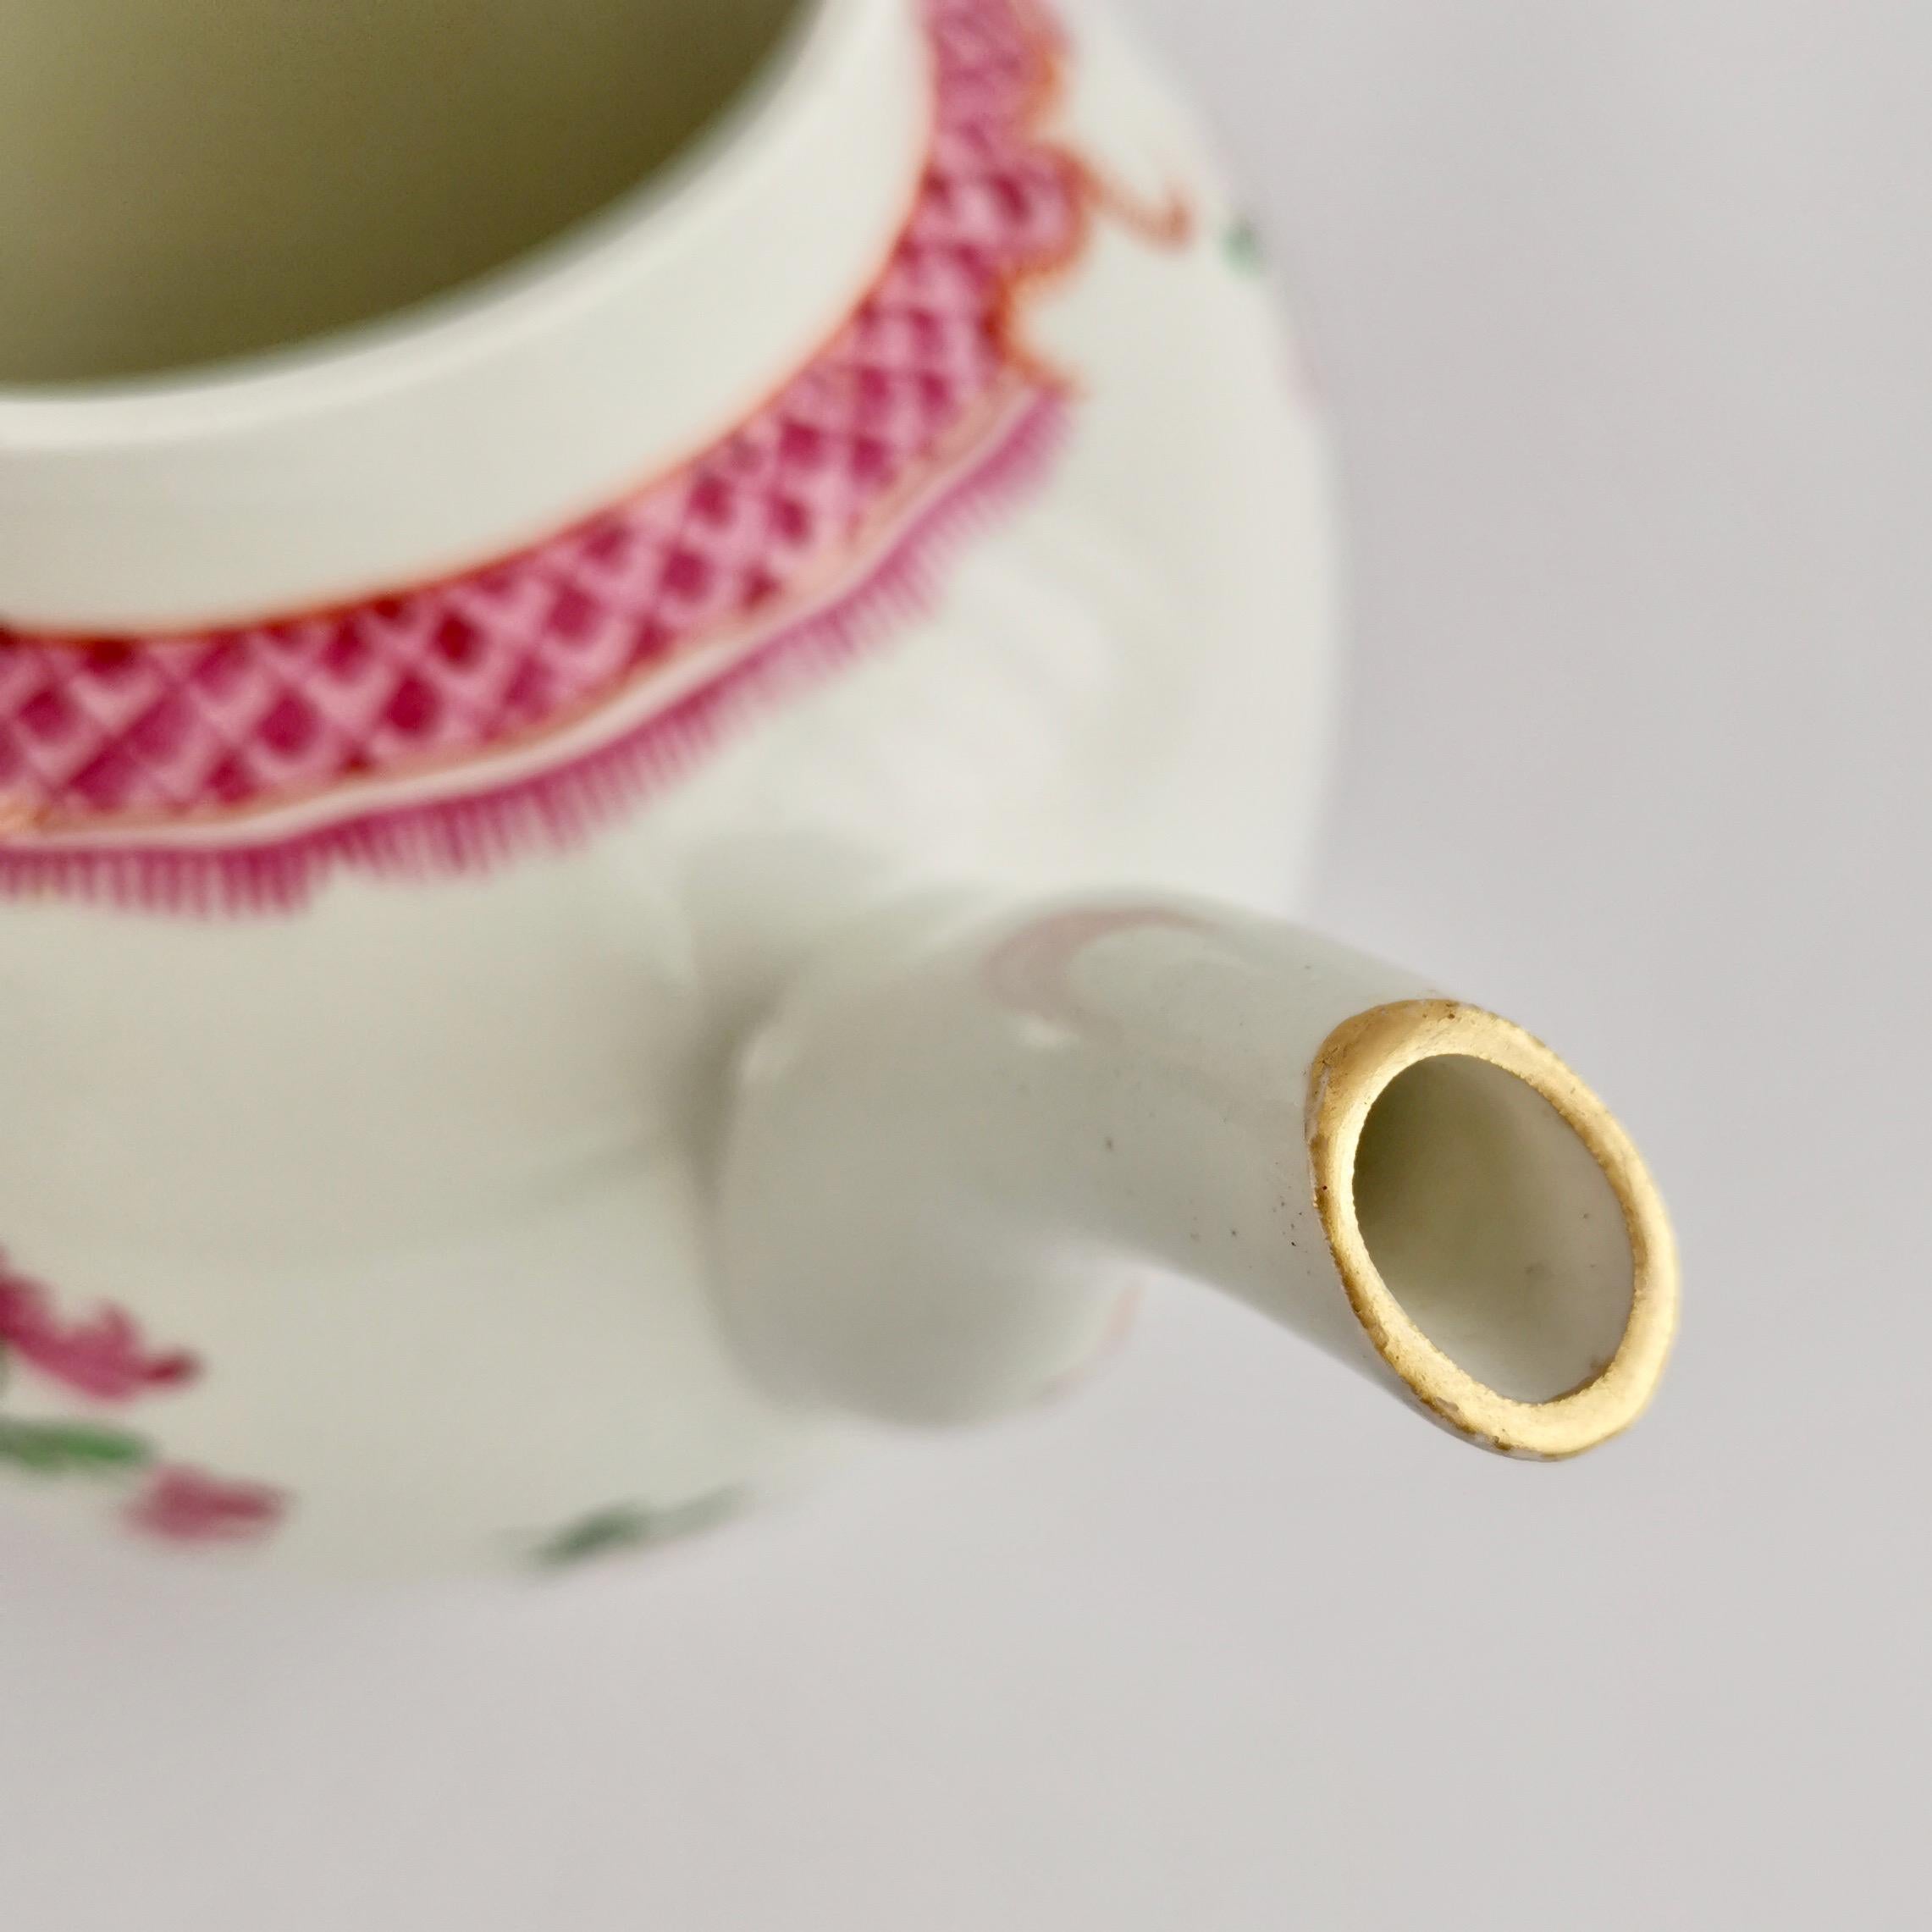 Caughley Porcelain Teapot, Pink Floral Compagnie des Indes, ca 1785 For Sale 6